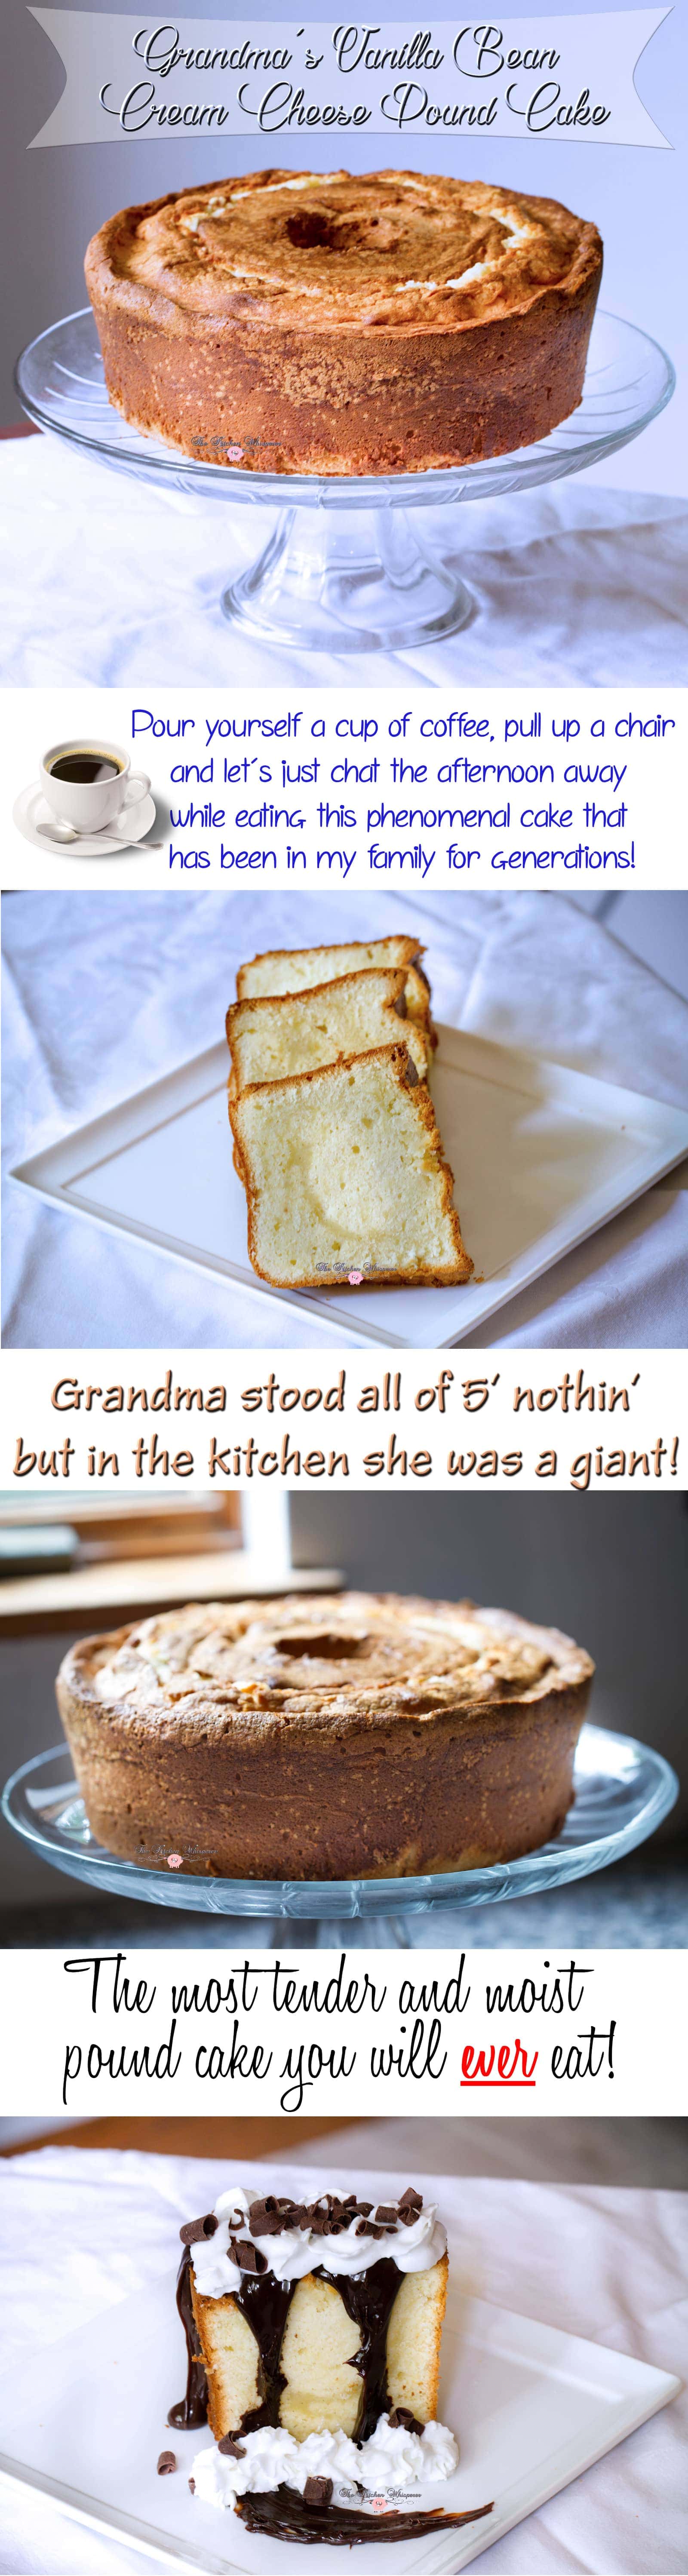 Grandma's Vanilla Bean Cream Cheese Pound Cake Collage